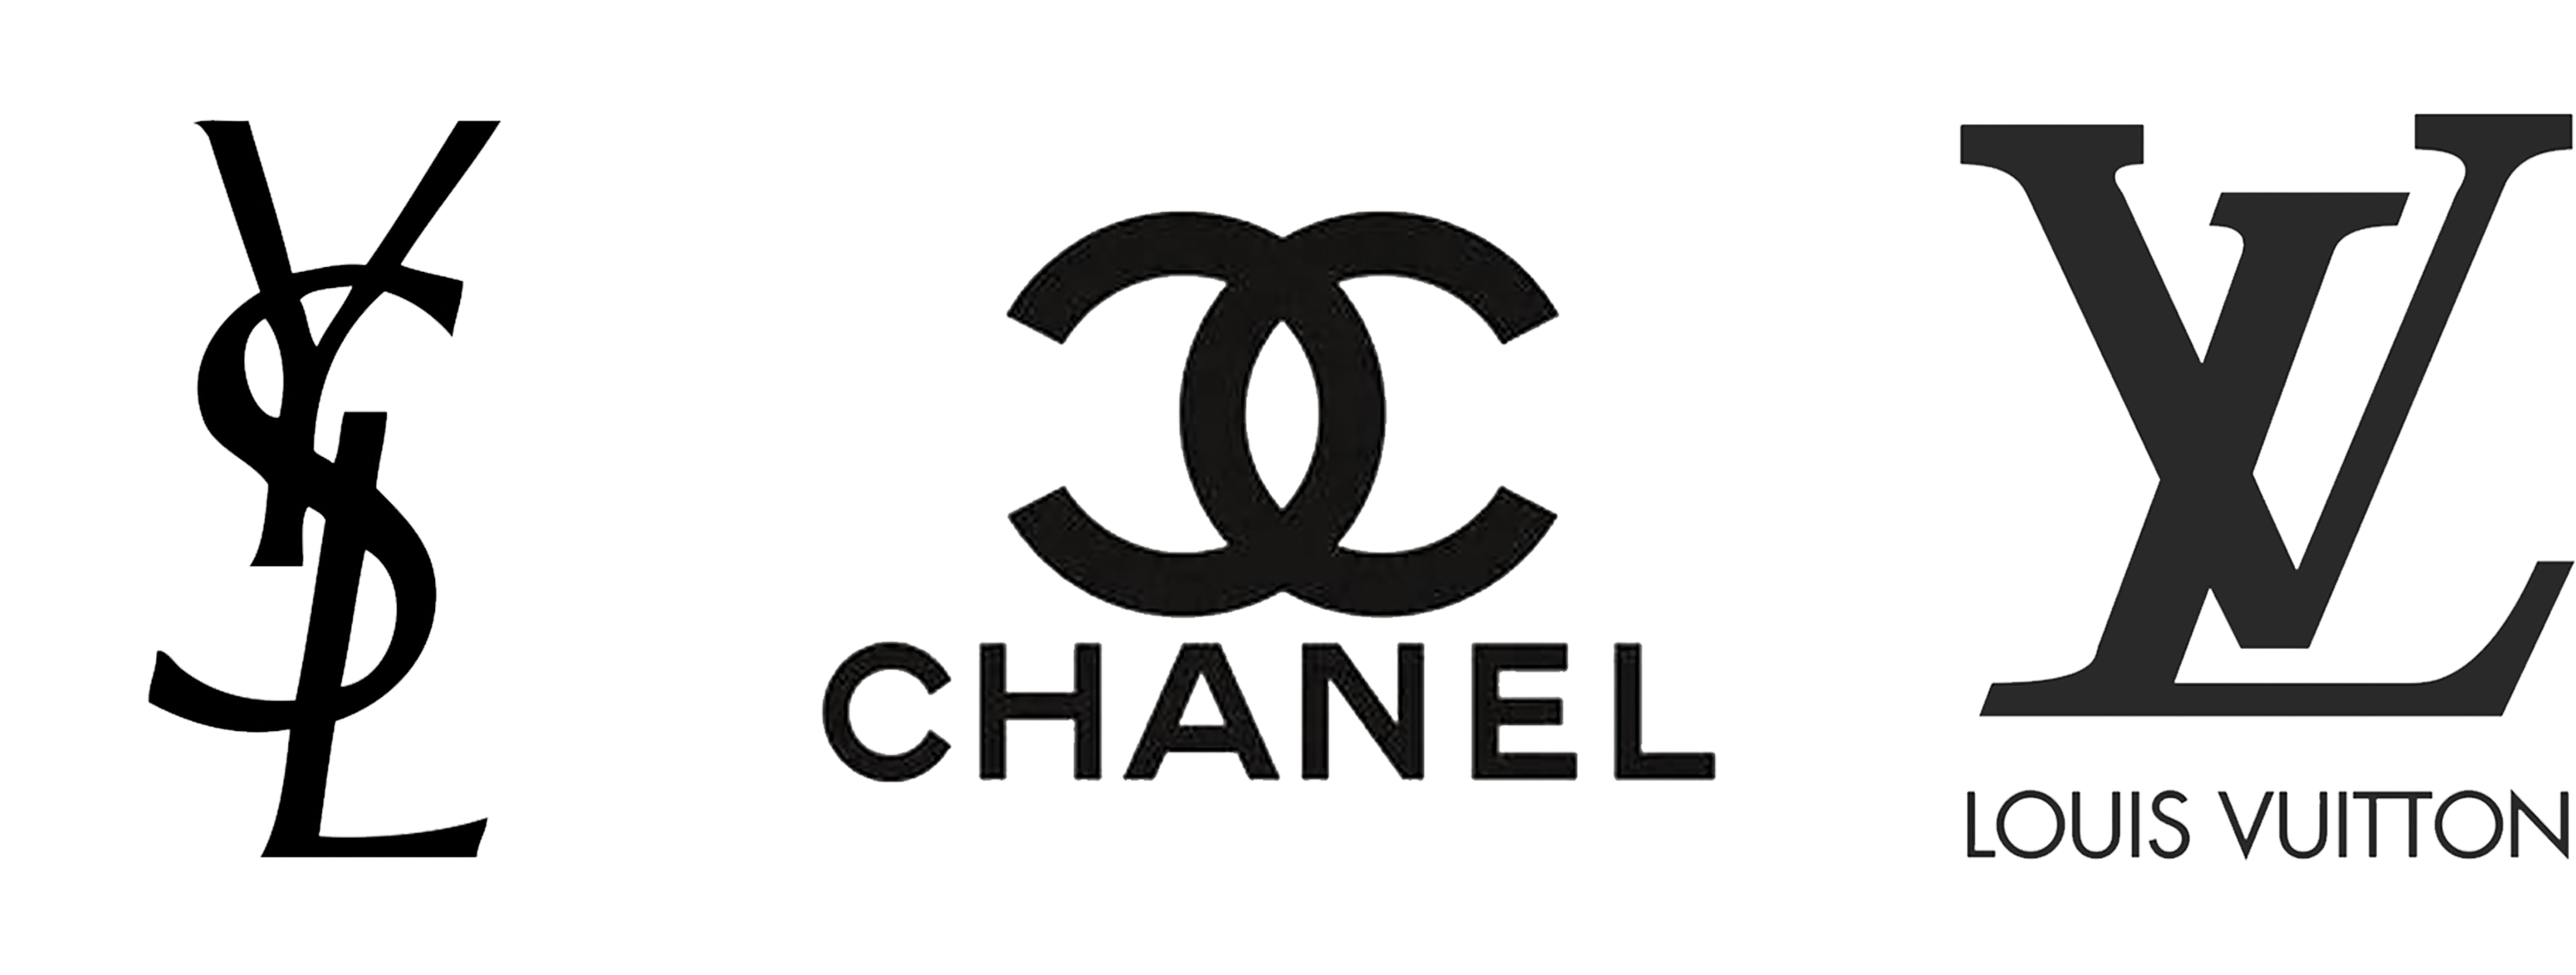 Chanel logo PNG descargar imagen